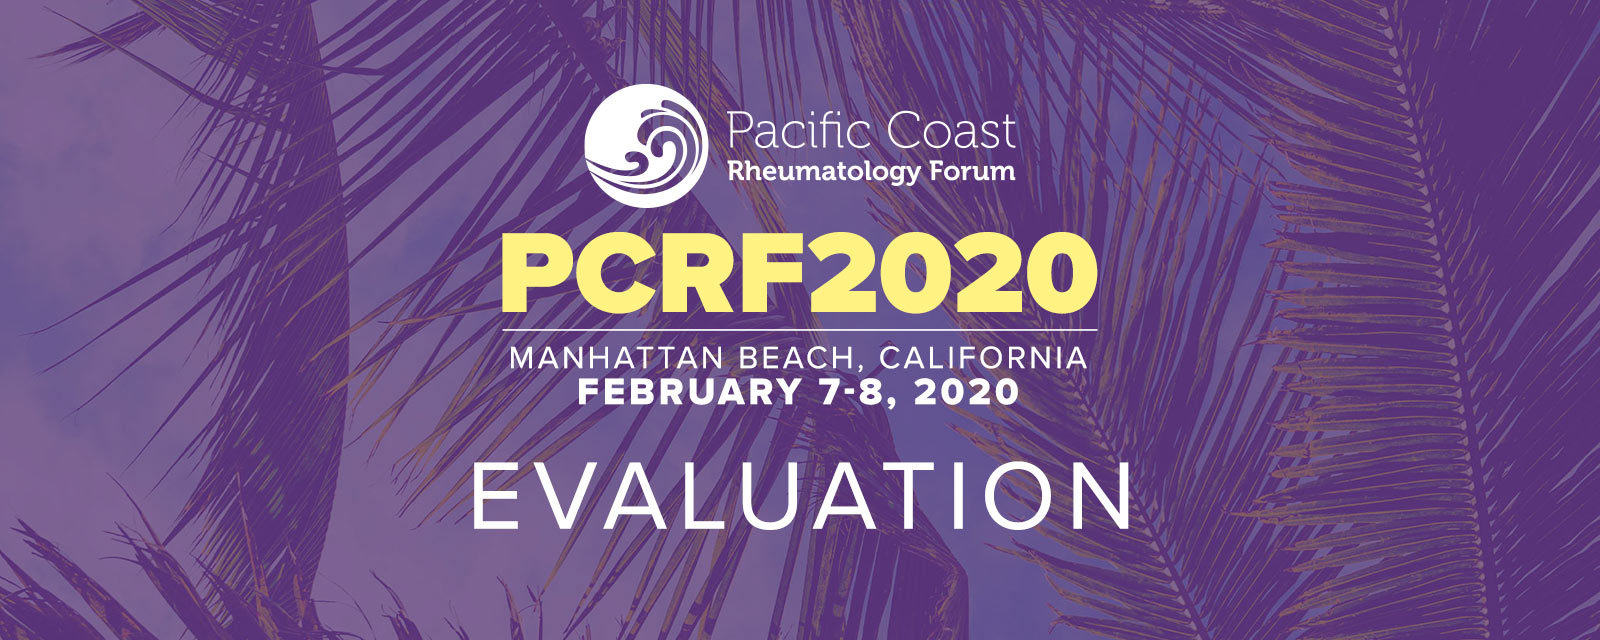 Live Evaluation: 2020 Pacific Coast Rheumatology Forum